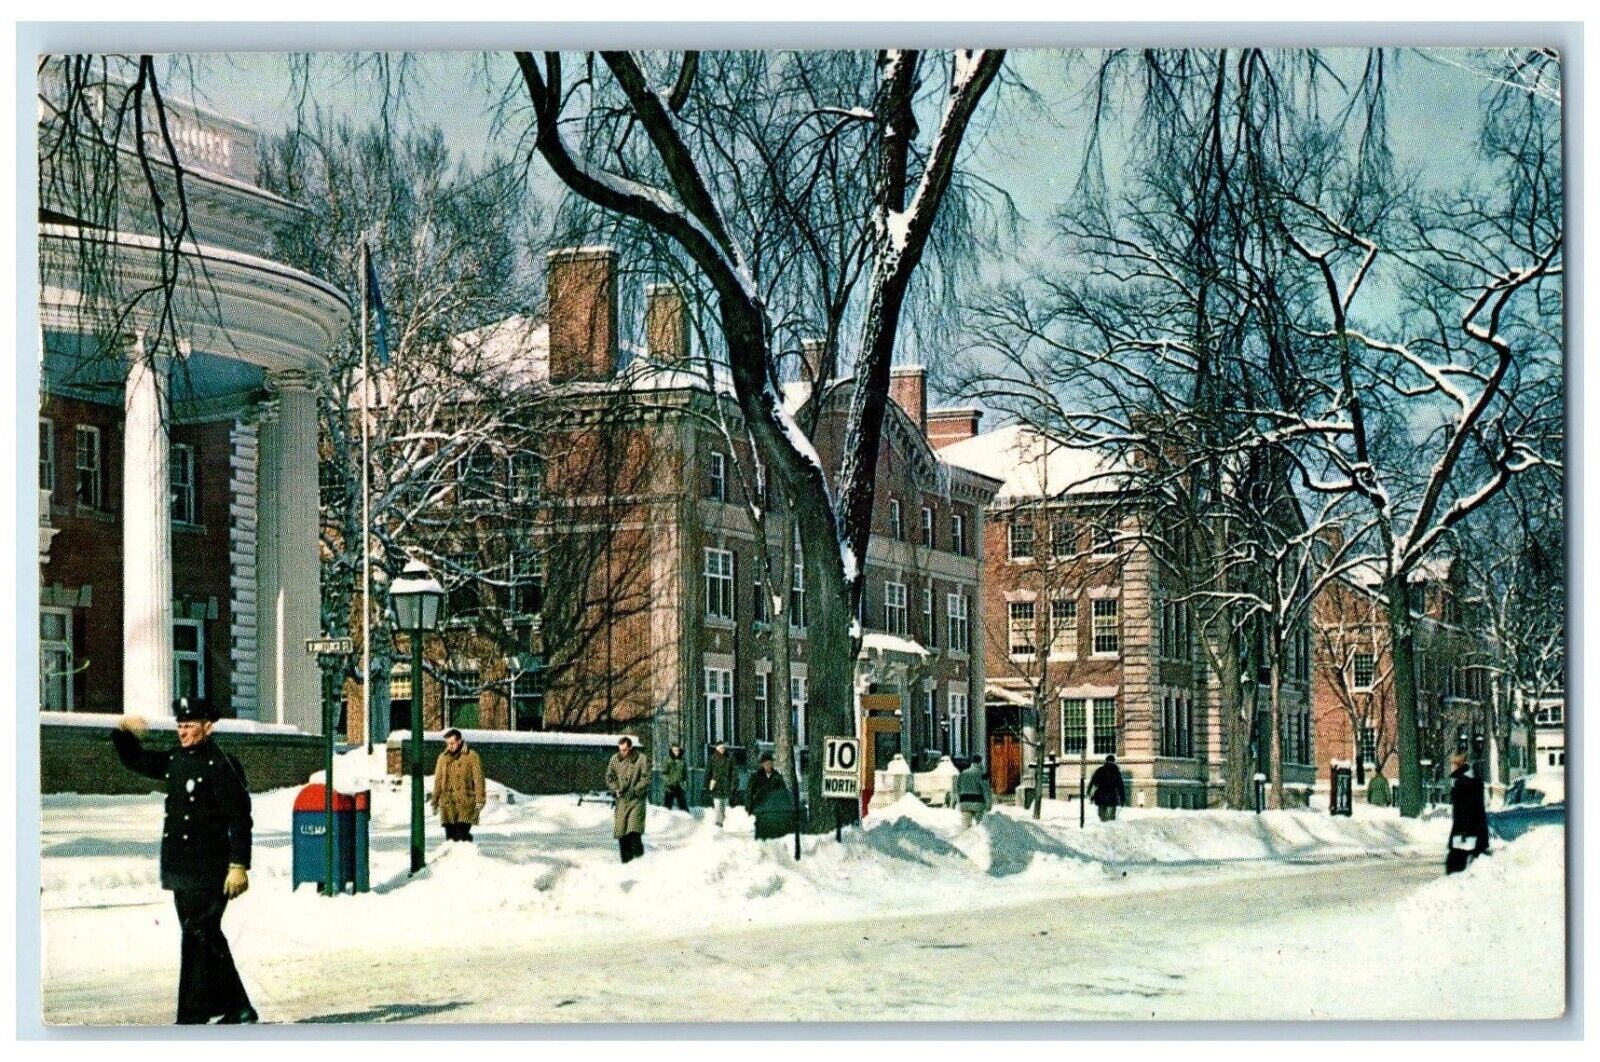 1963 North Main Street Darthmouth College Campus Hanover NH, Winter Postcard